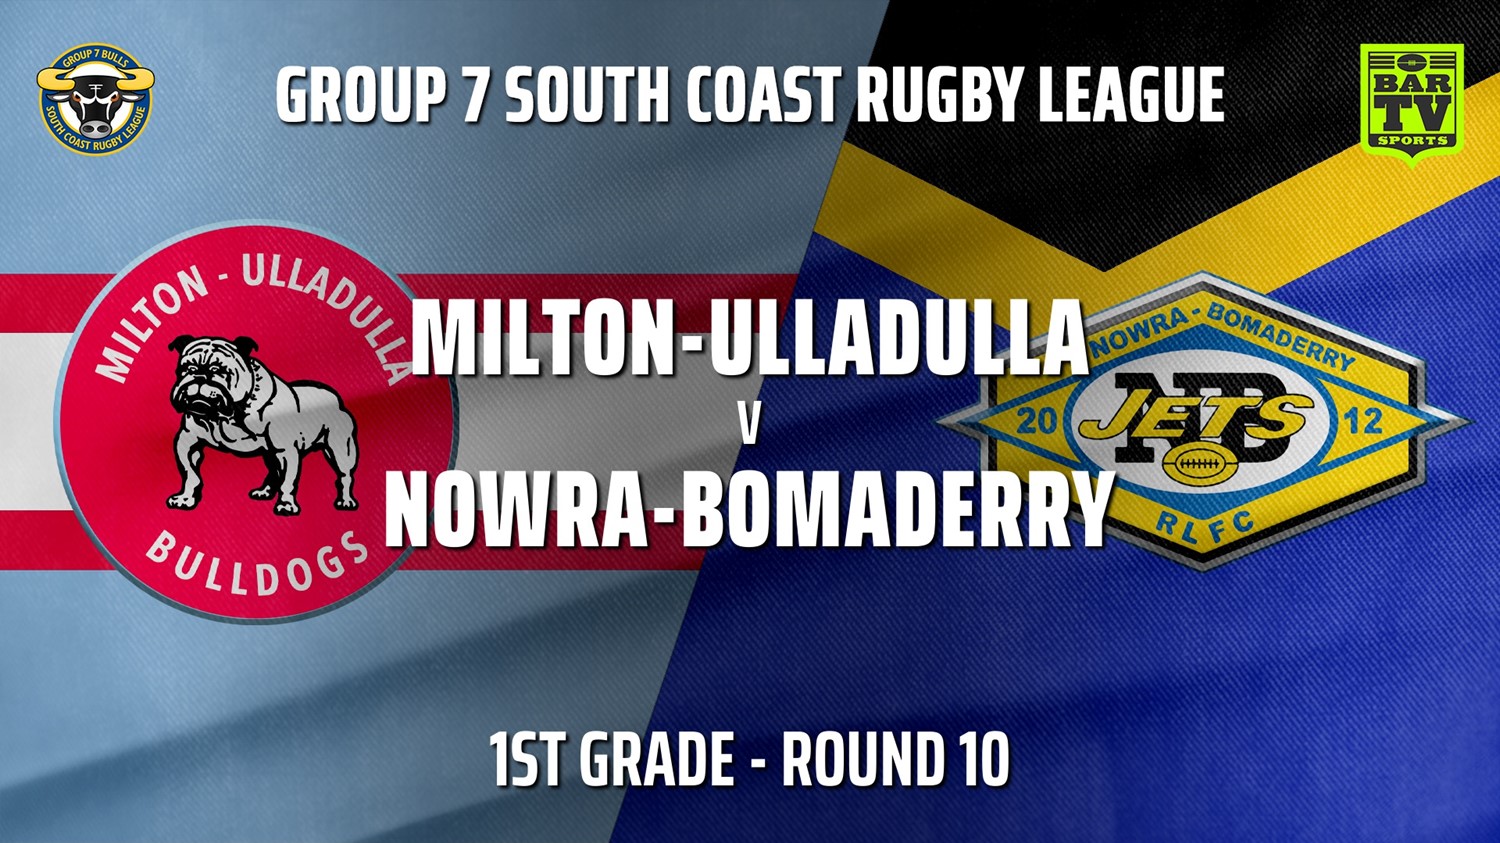 210620-South Coast Round 10 - 1st Grade - Milton-Ulladulla Bulldogs v Nowra-Bomaderry  Slate Image